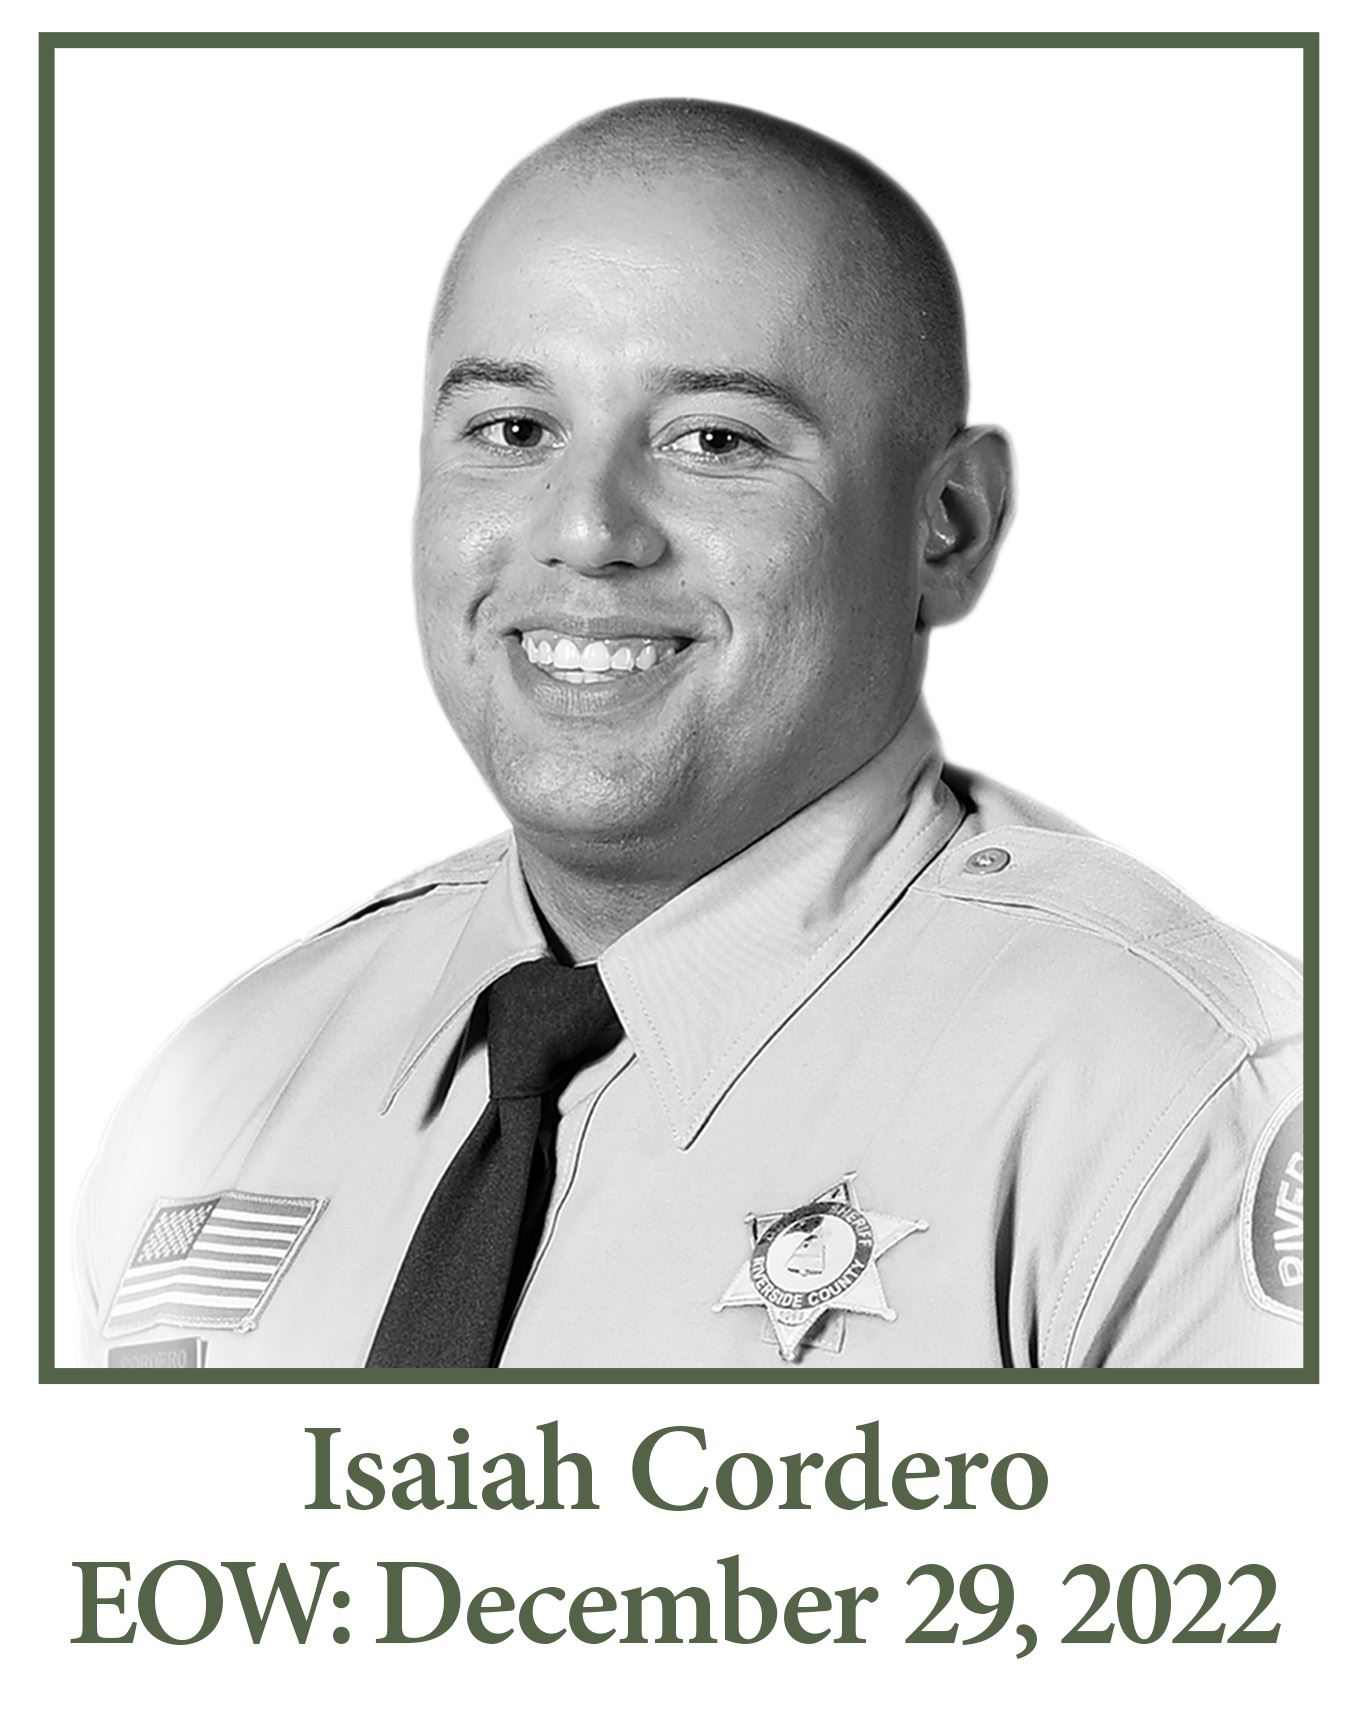 Isaiah Cordero EOW: December 29, 2022